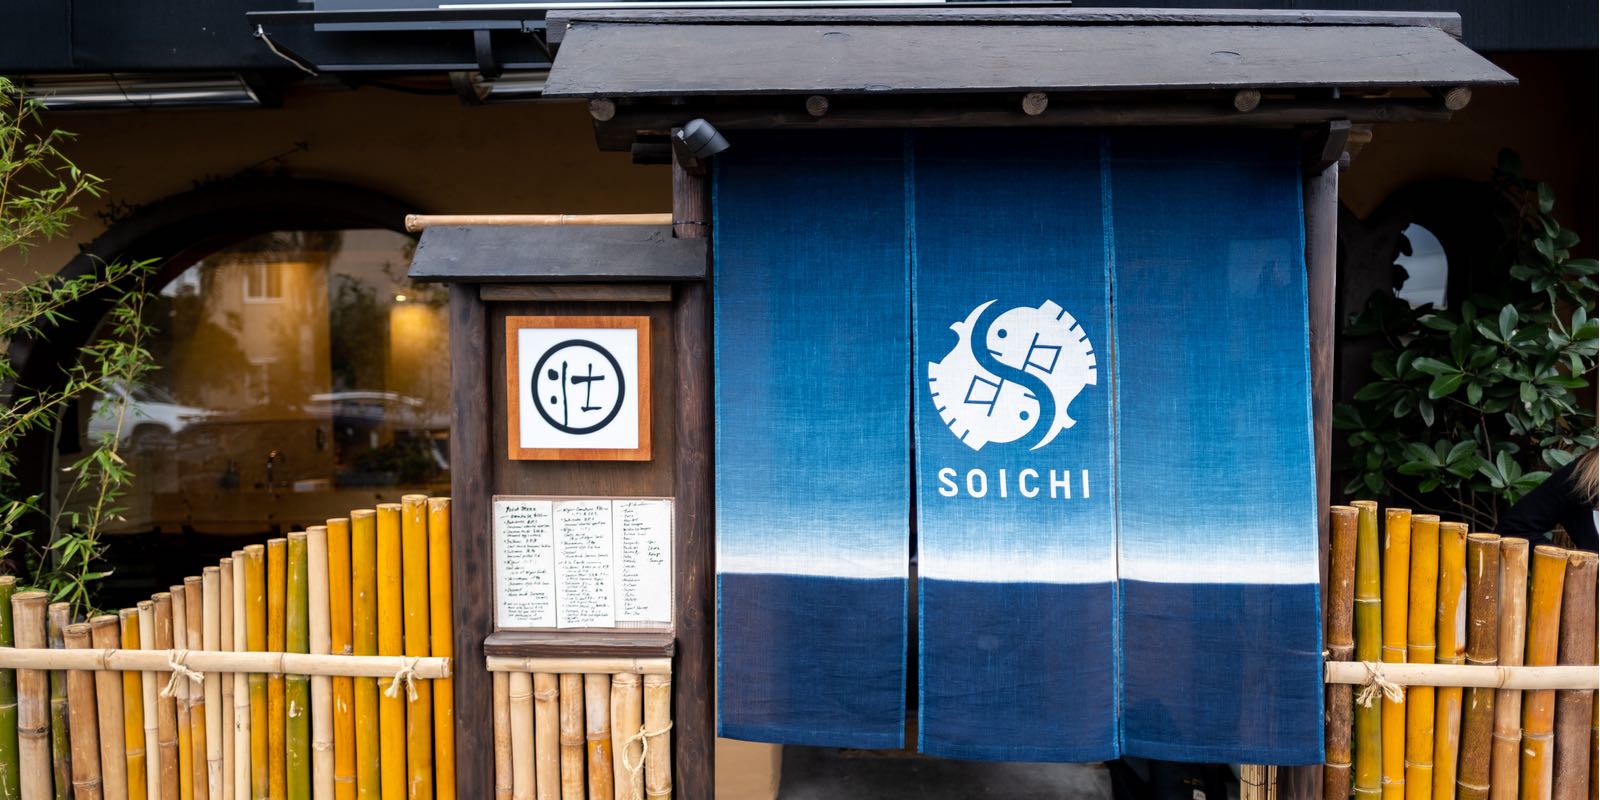 Soichi is now a Michelin Star Restaurant